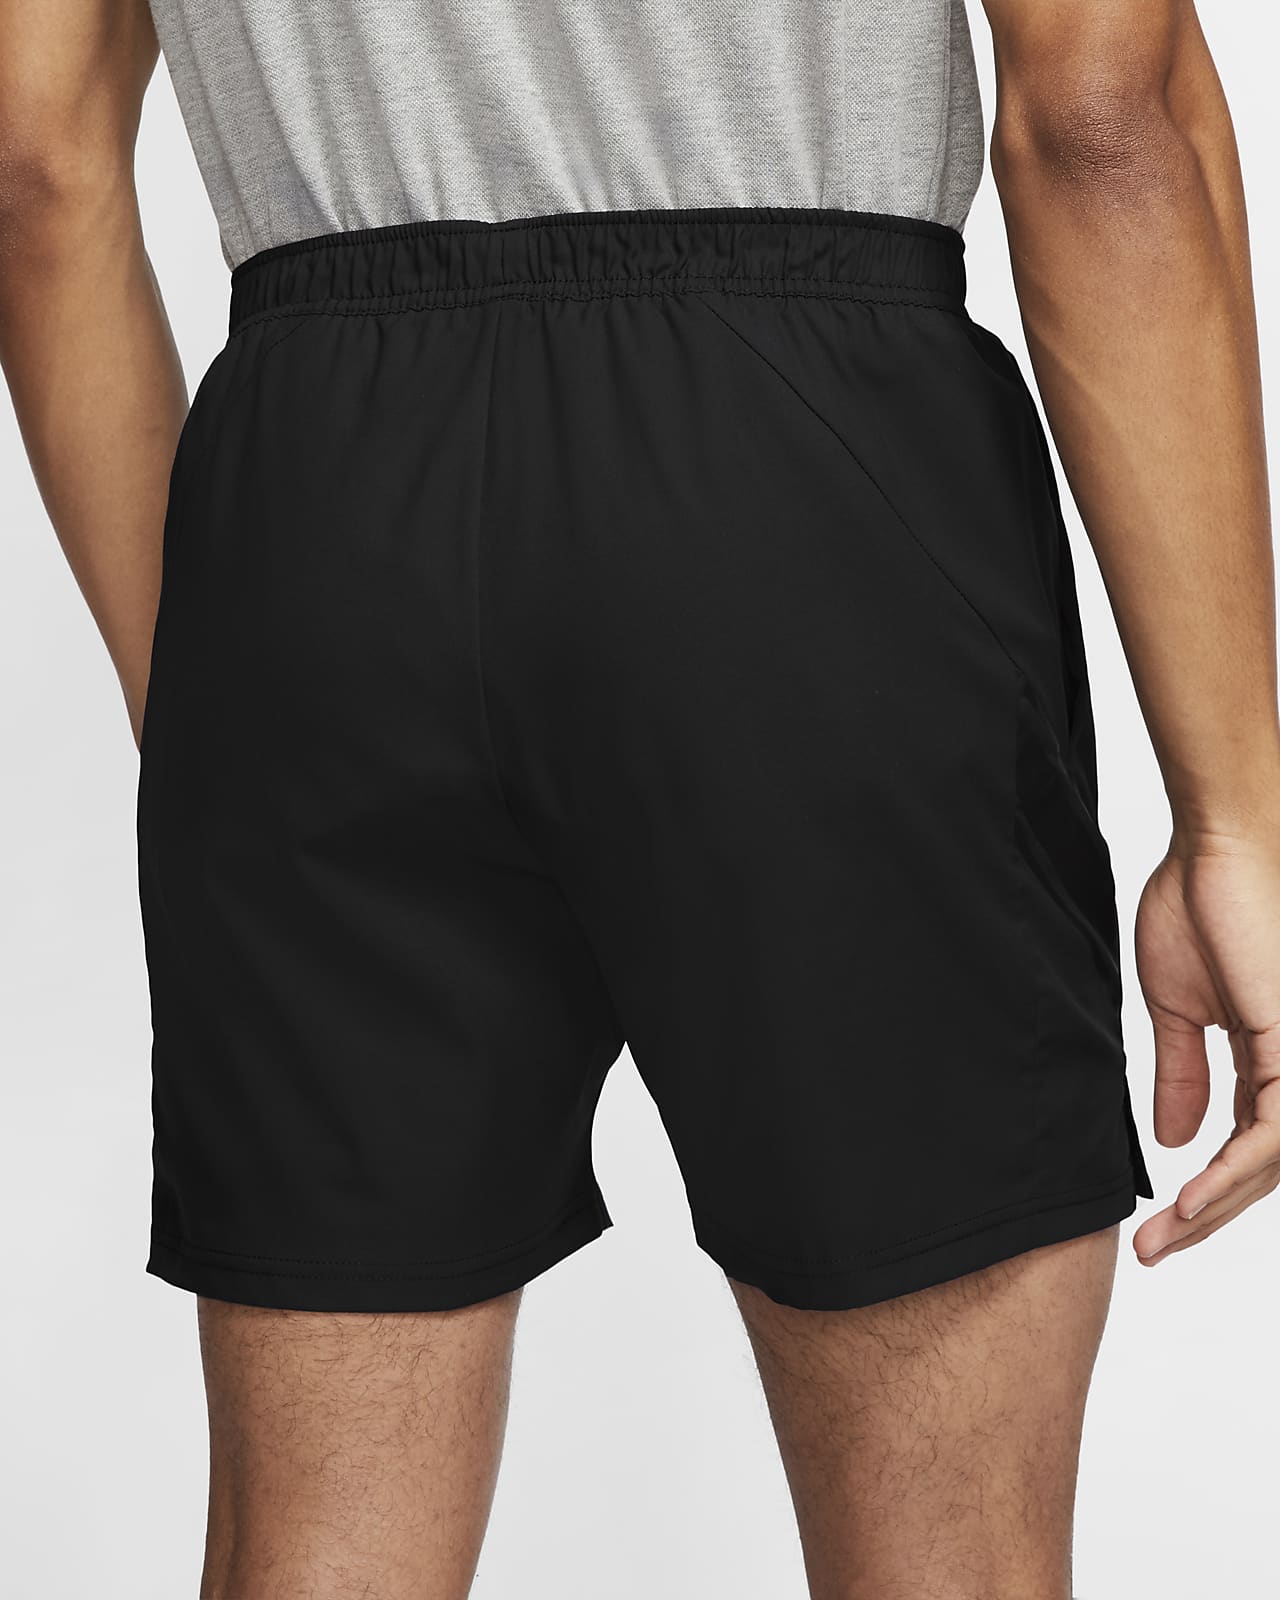 nike men's 7 inch tennis shorts